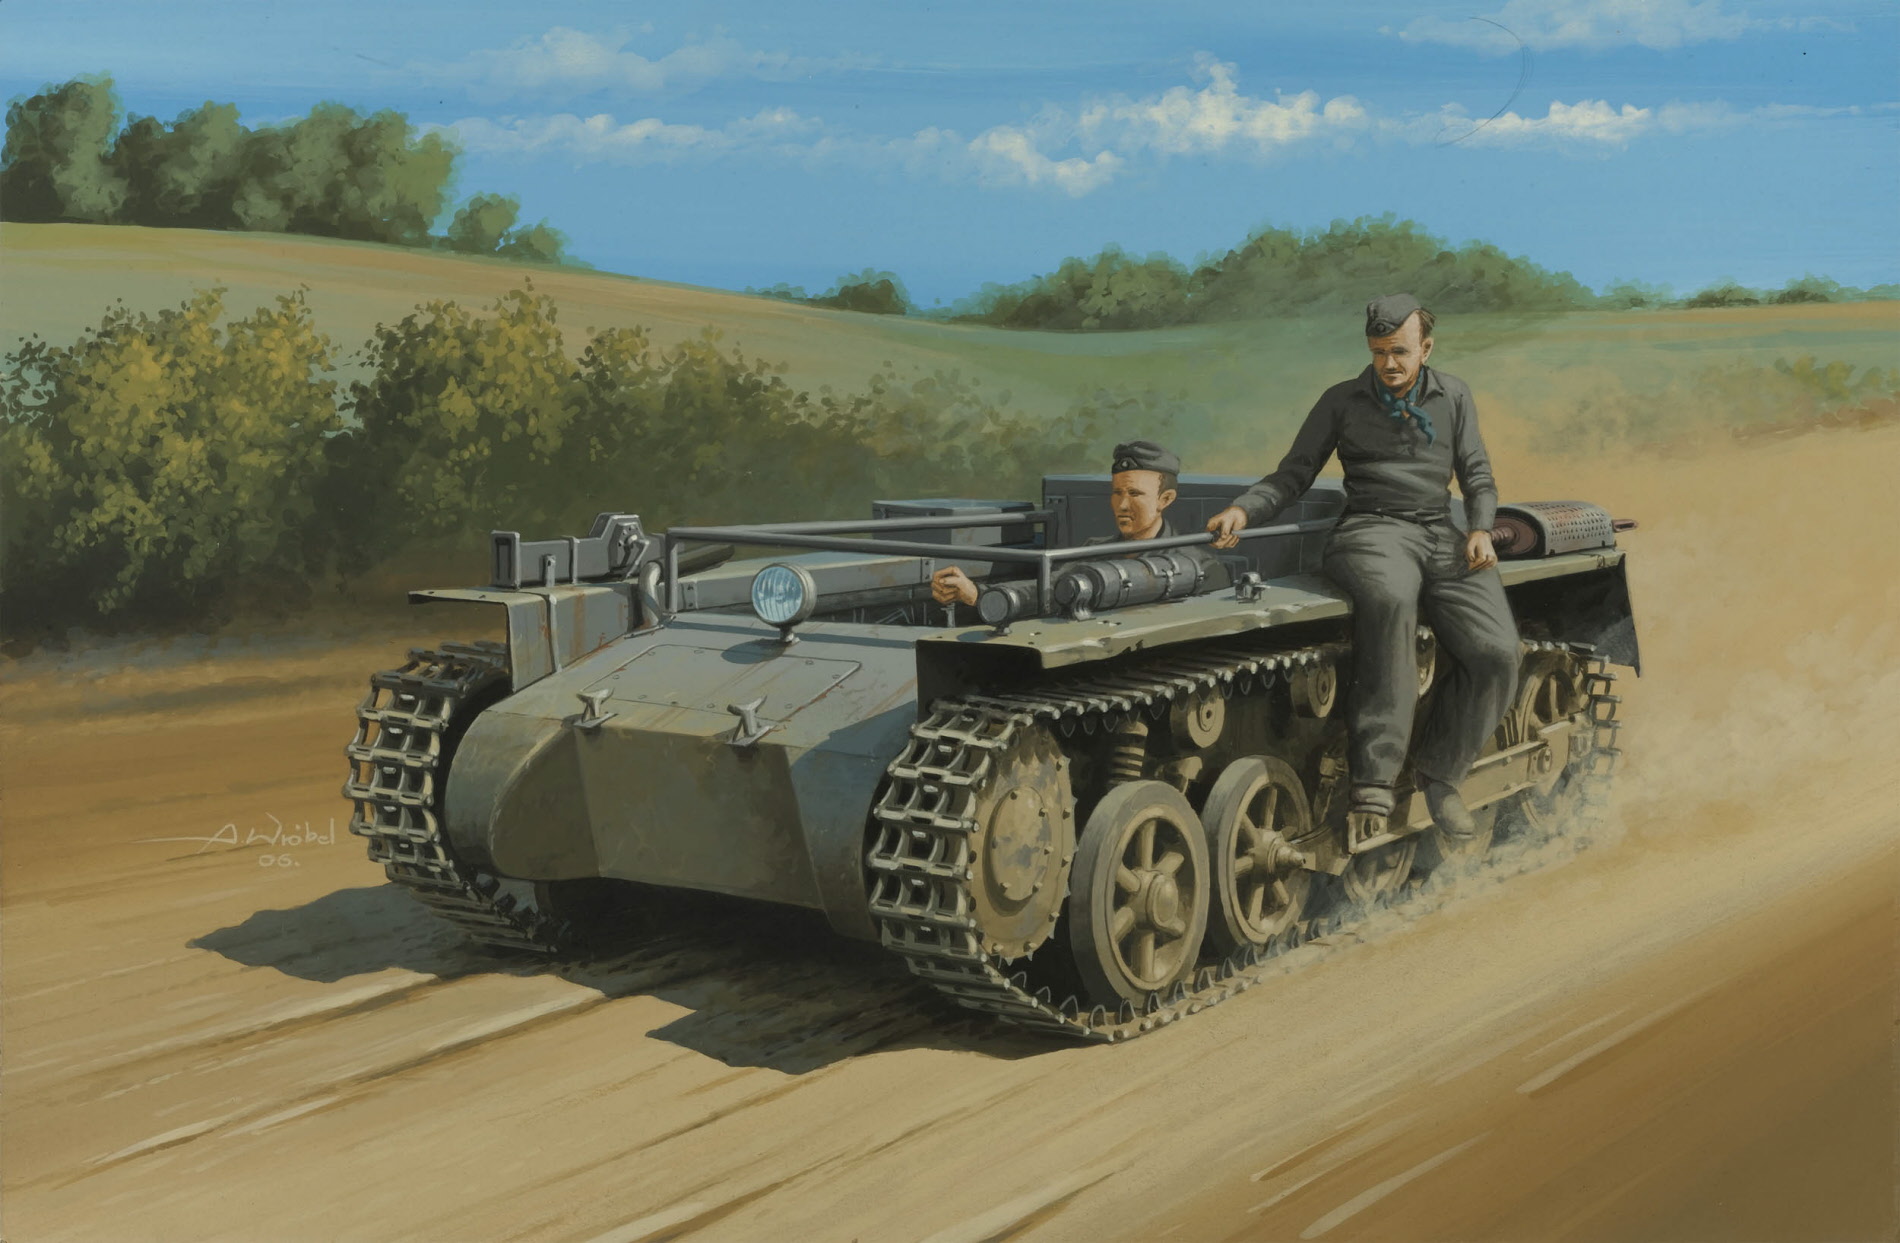 Wróbel Arkadiusz. Обучающий вождению Panzerkampfwagen I Ausf.A.